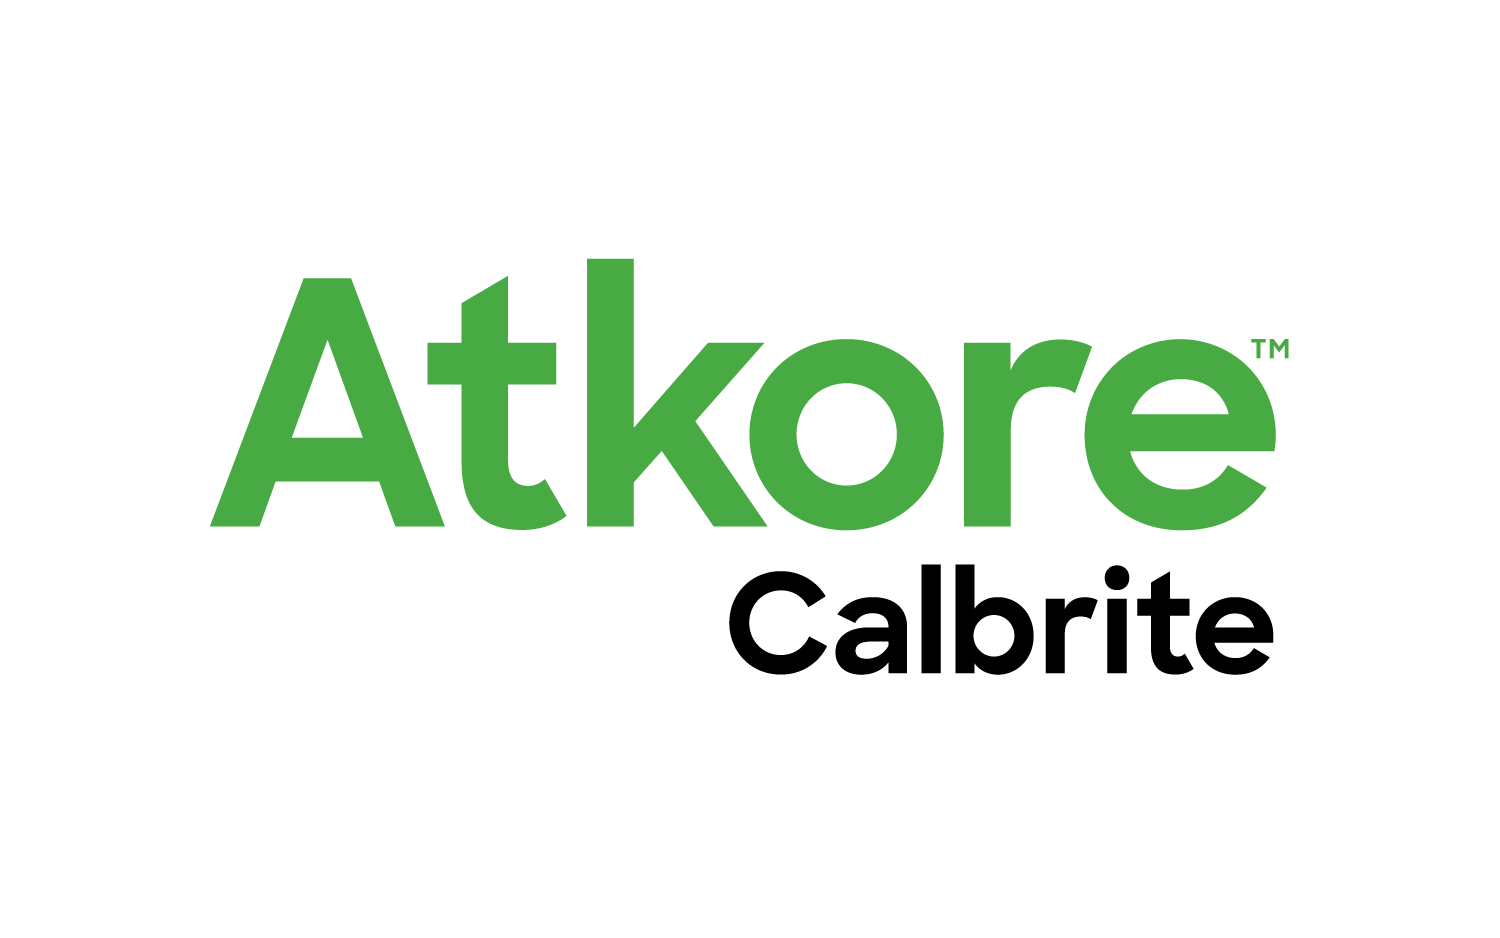 ATK 24194 Brand Logo SubBrand Calbrite RGB Color STI Producers